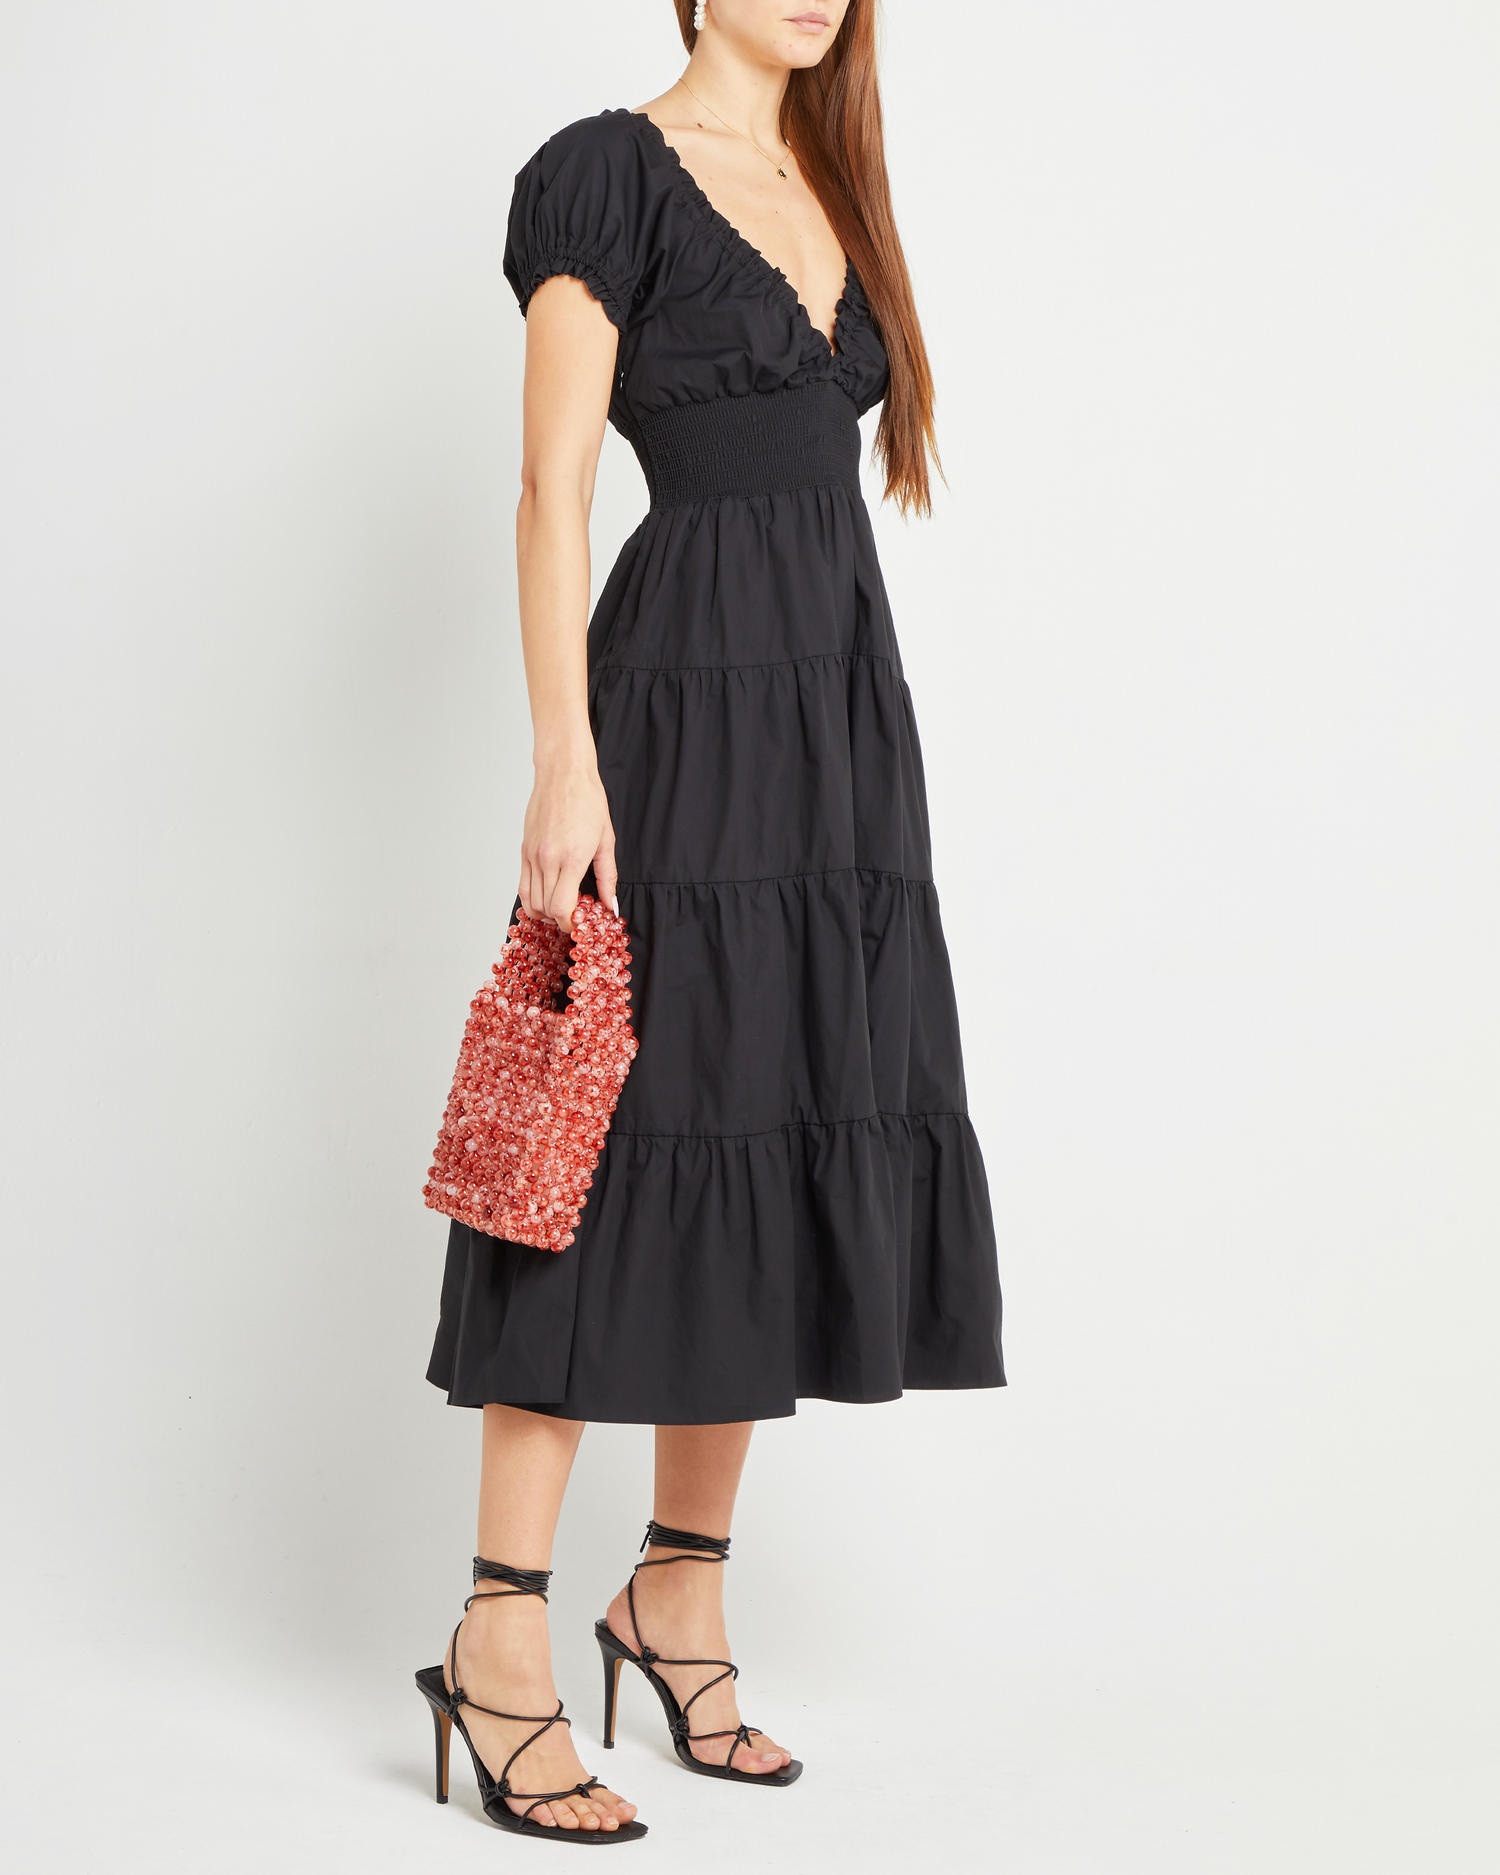 Third image of Cotton Delia Dress, a black midi dress, V-neck, ruffle, cap sleeves, short sleeves, tiered